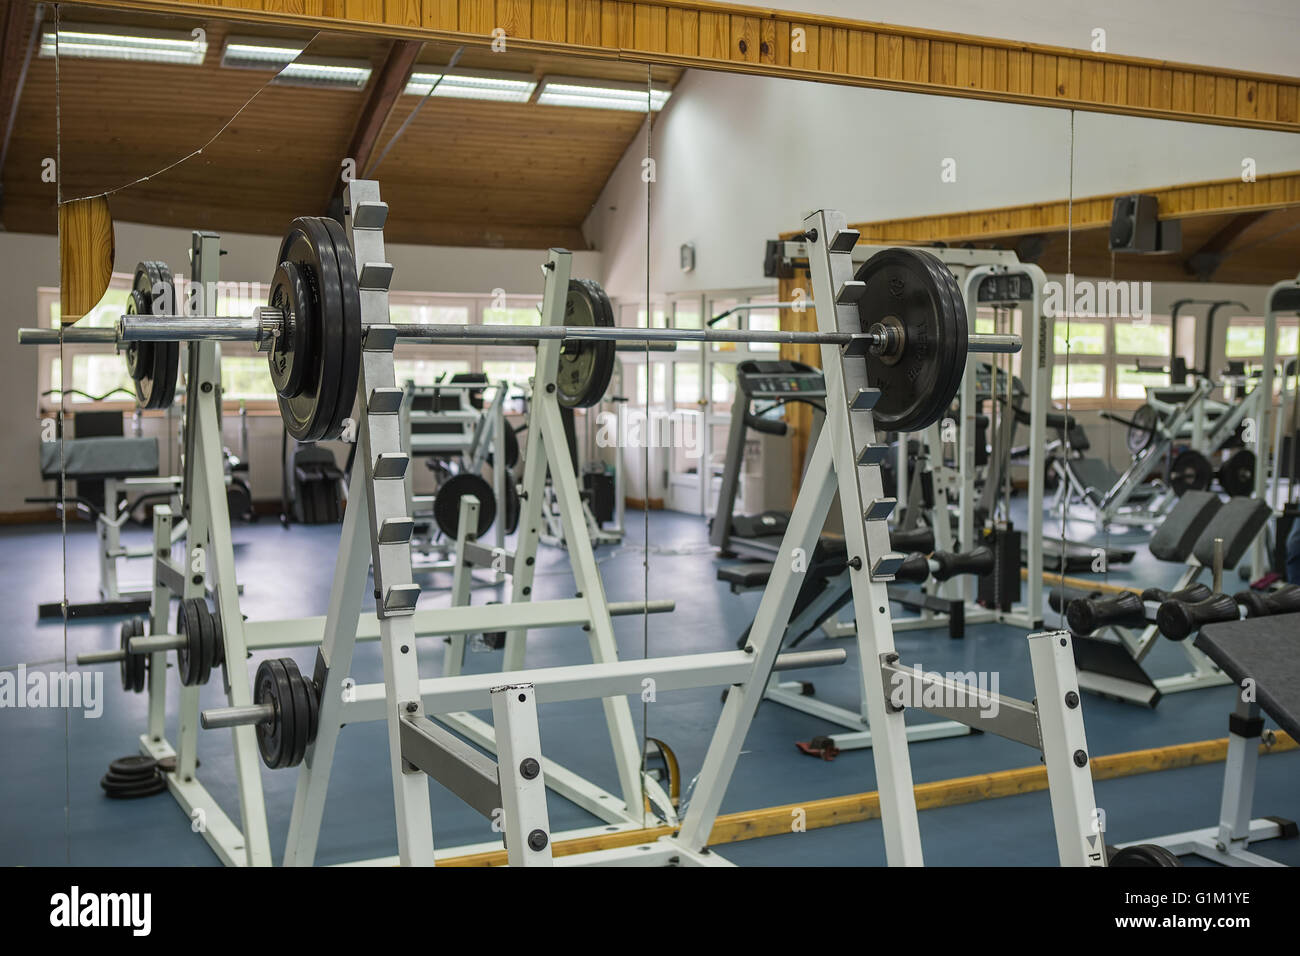 Fitnessgeräte im Fitness-Studio. Stockfoto